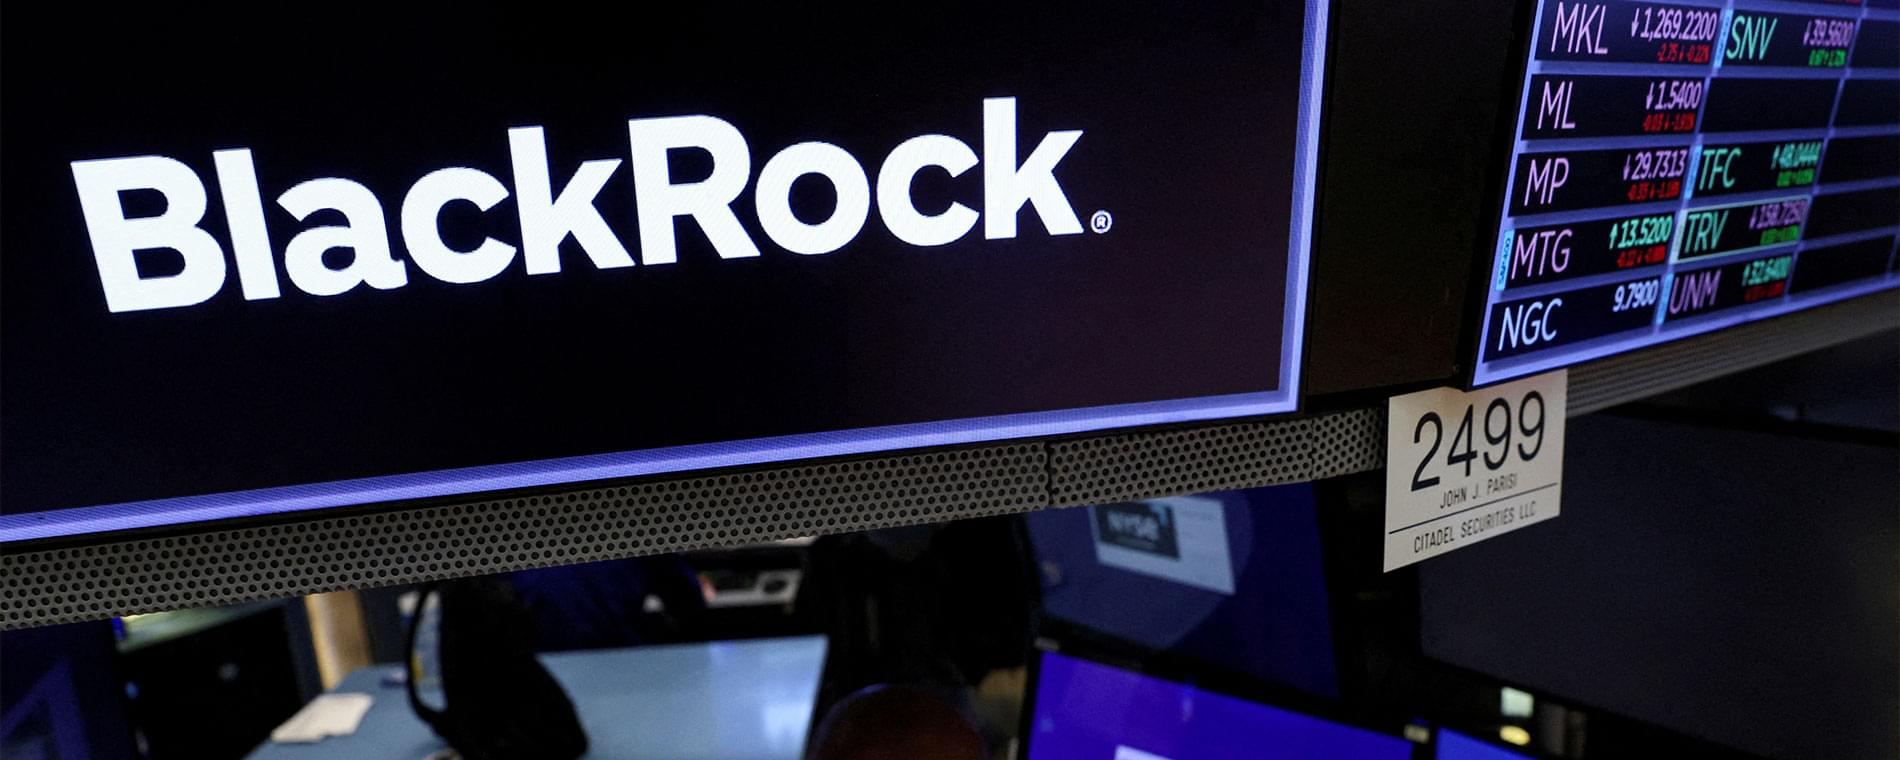 Blackrock launches direct BTC exposure for US investors